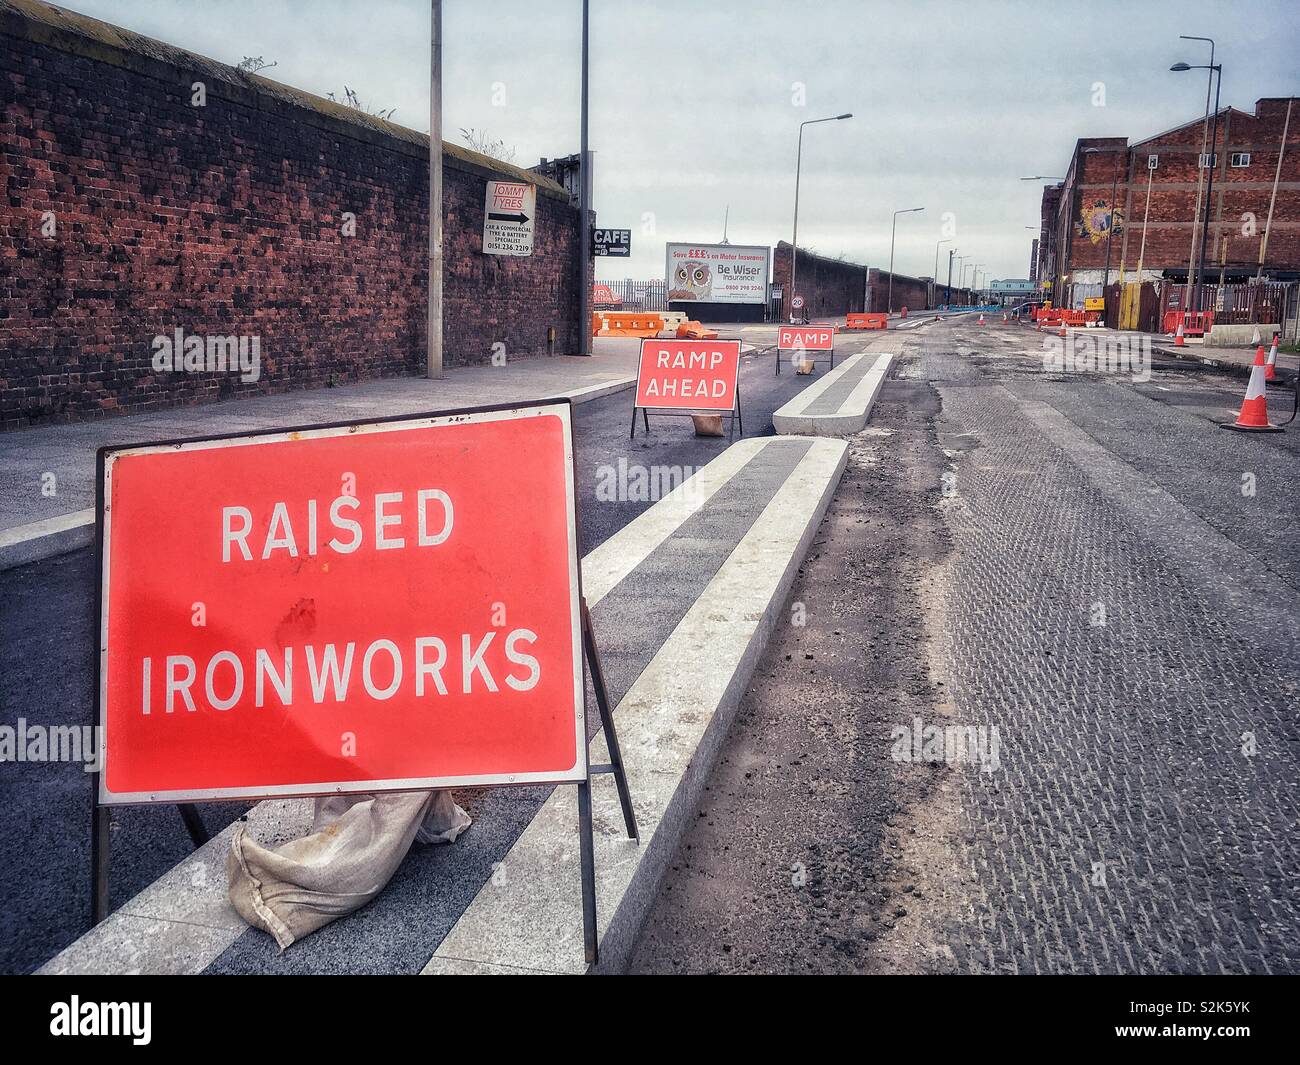 Raised ironworks sign Waterloo rd Liverpool UK. Stock Photo